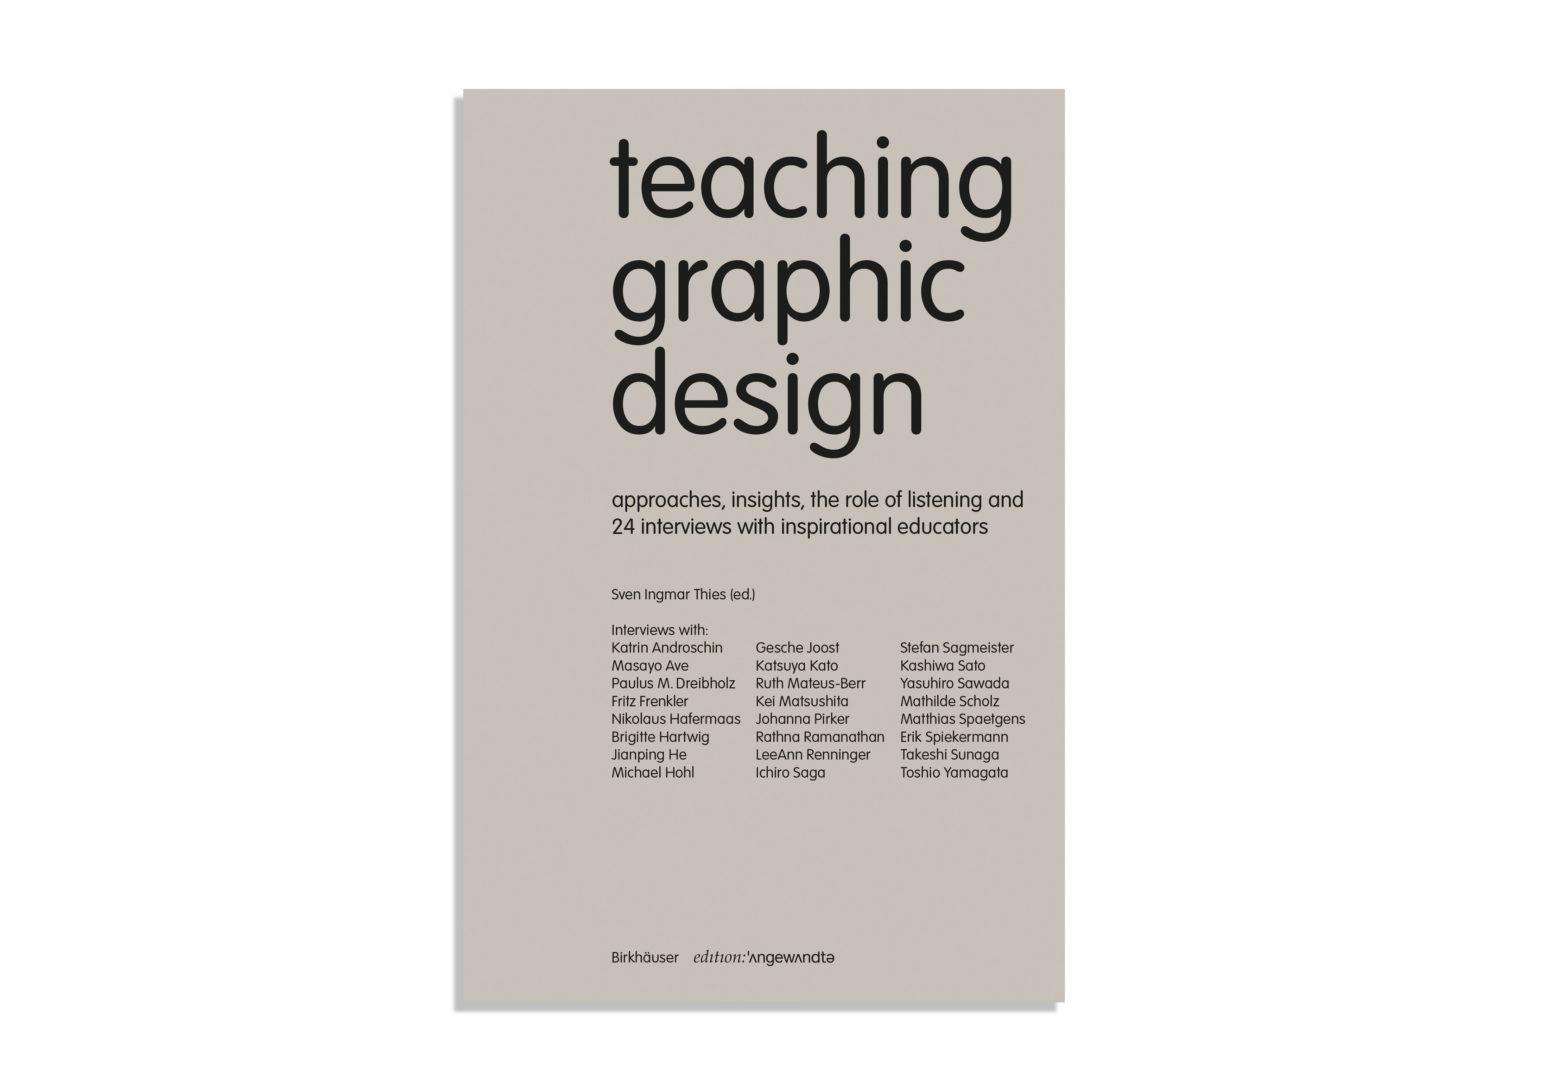 Teaching Graphic Design | Book presentation